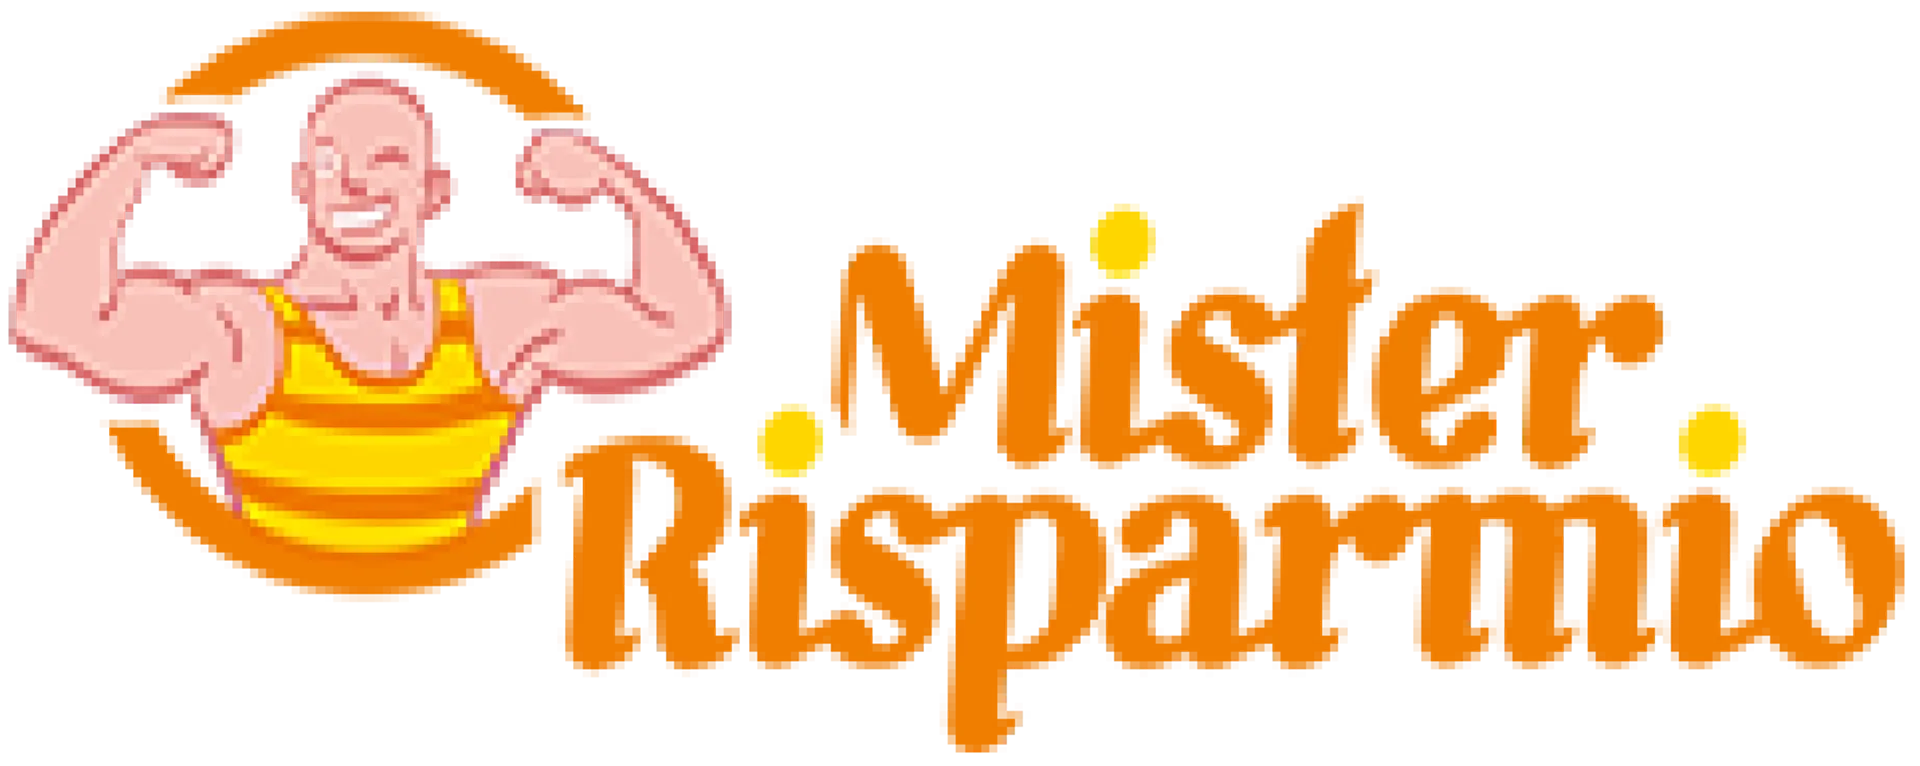 MISTER RISPARMIO logo